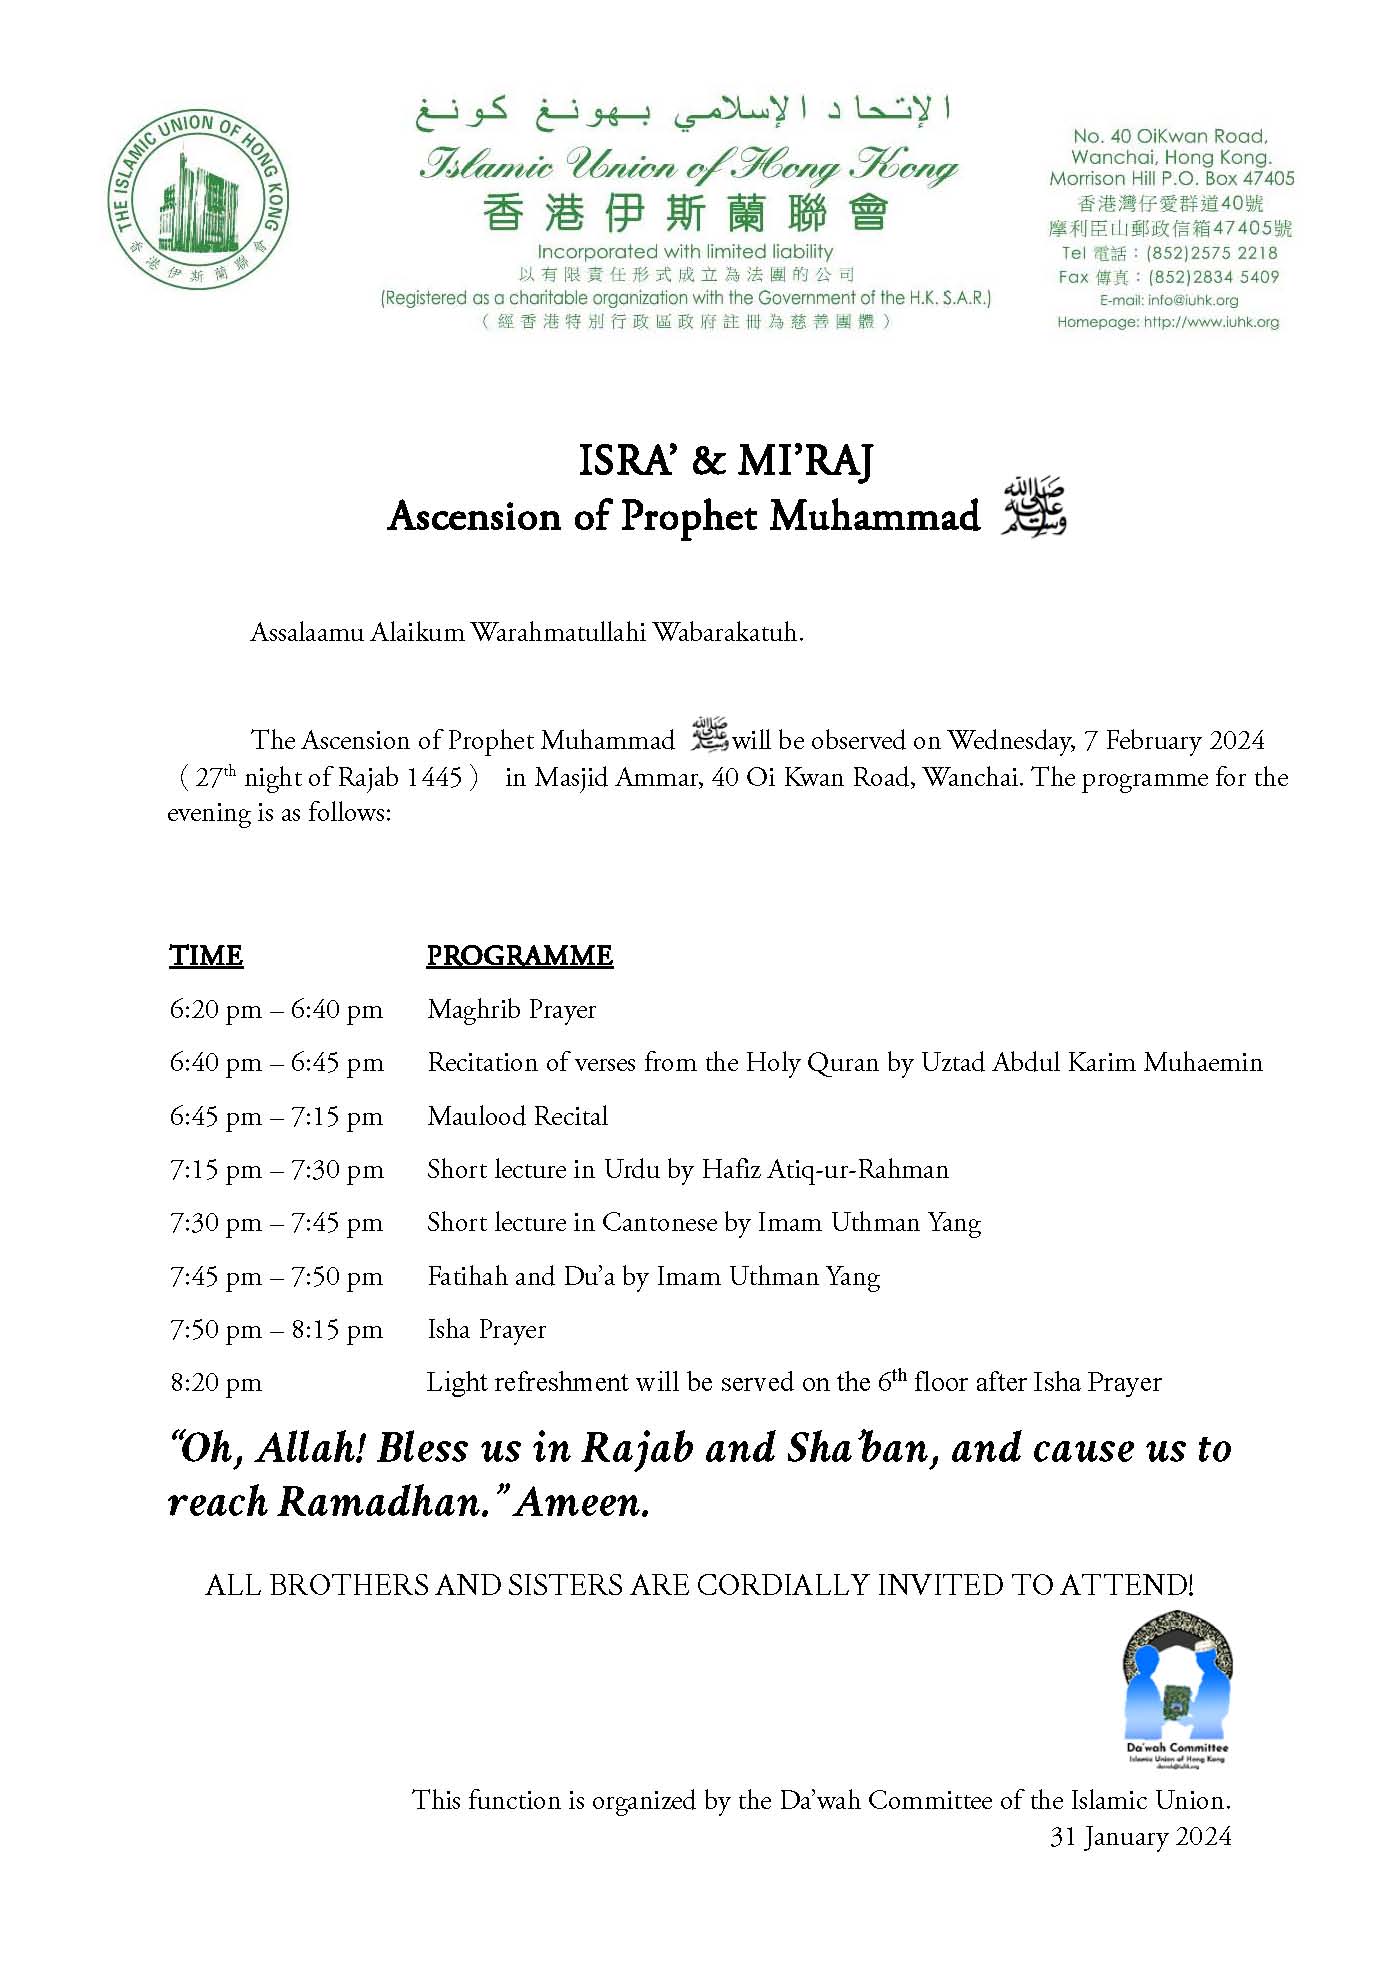 ISRA’ & MI’RAJ Ascension of Prophet Muhammad